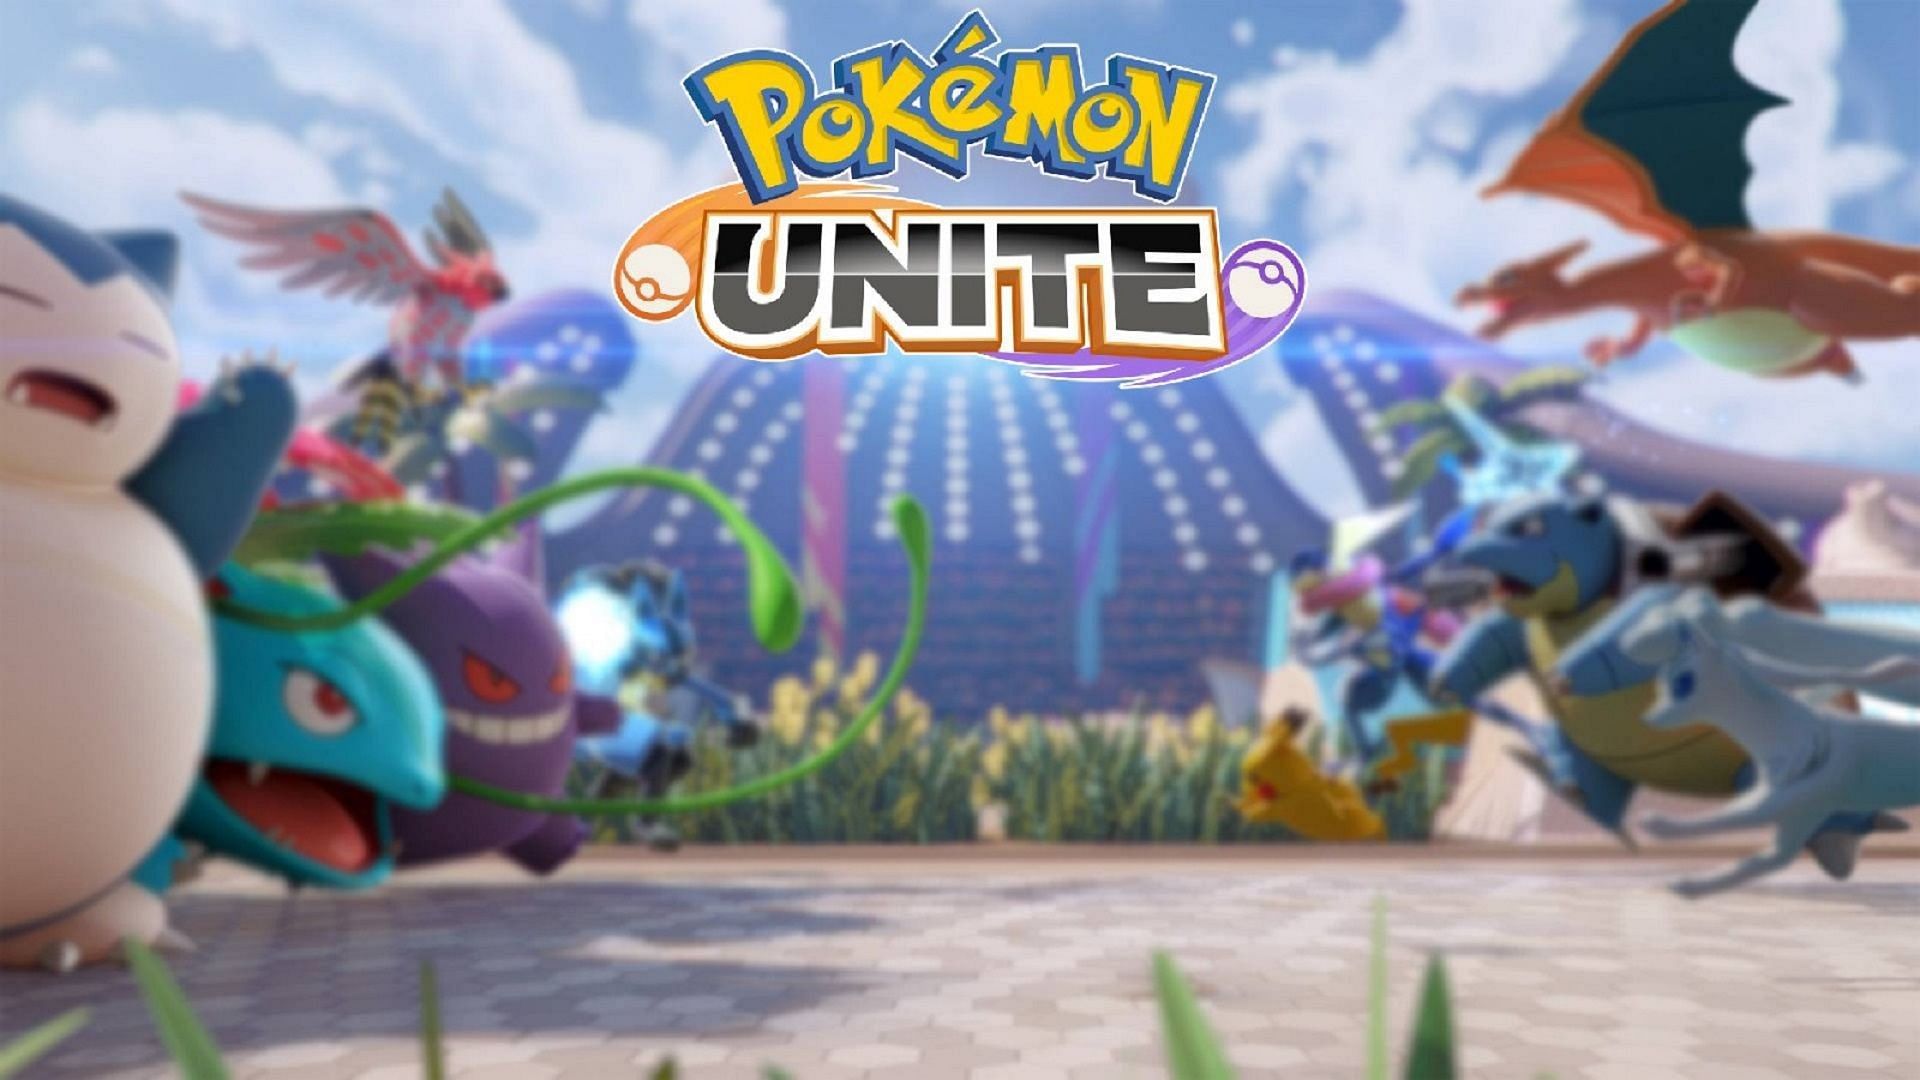 Pokemon Unite is a free-to-play MOBA game set in the Pokemon universe.